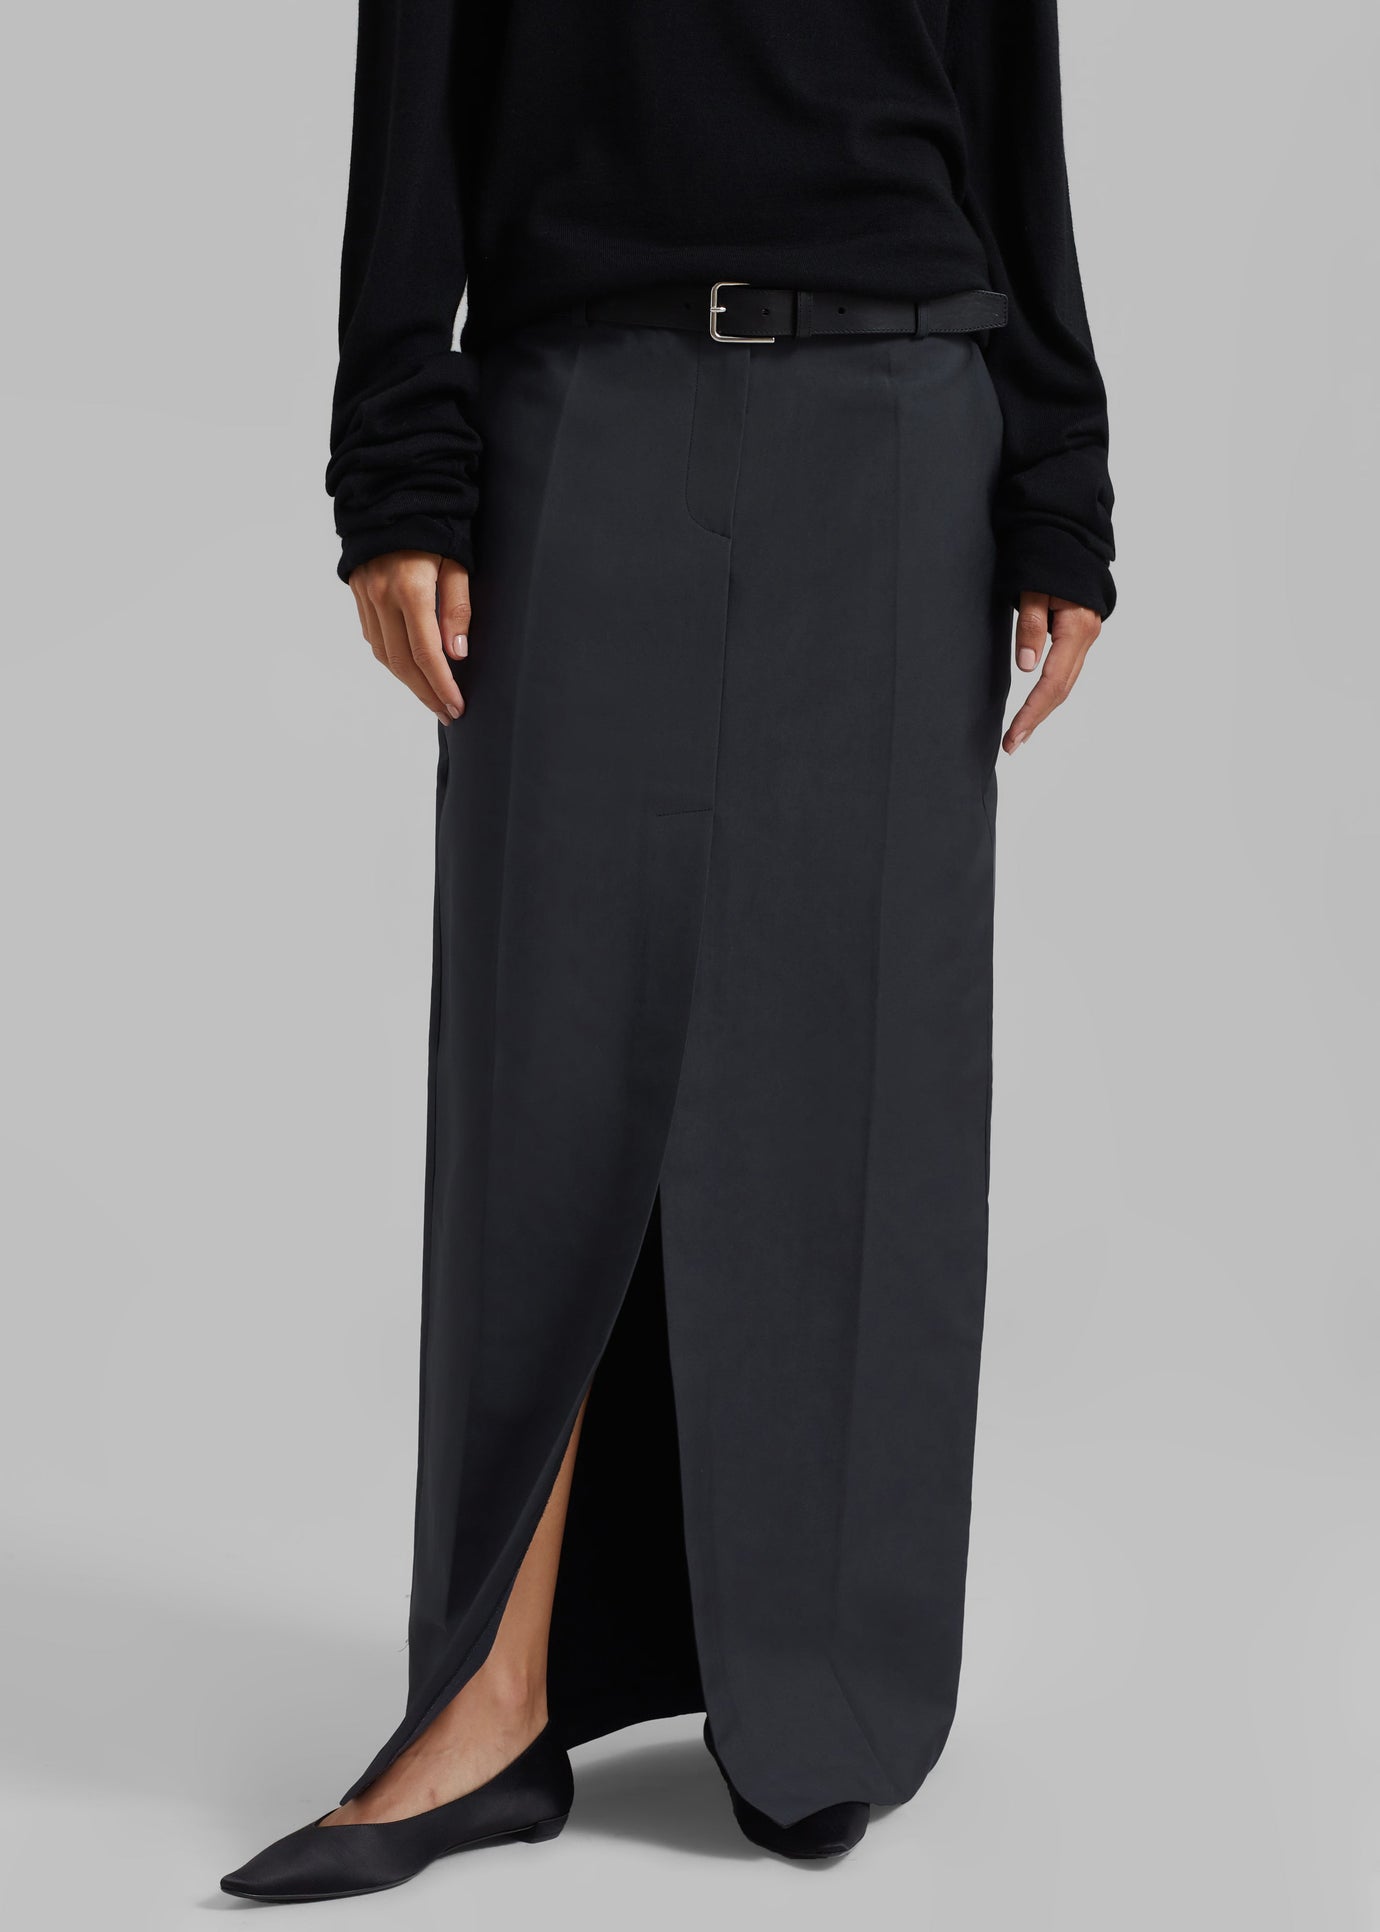 Carley Long Skirt - Charcoal - 1